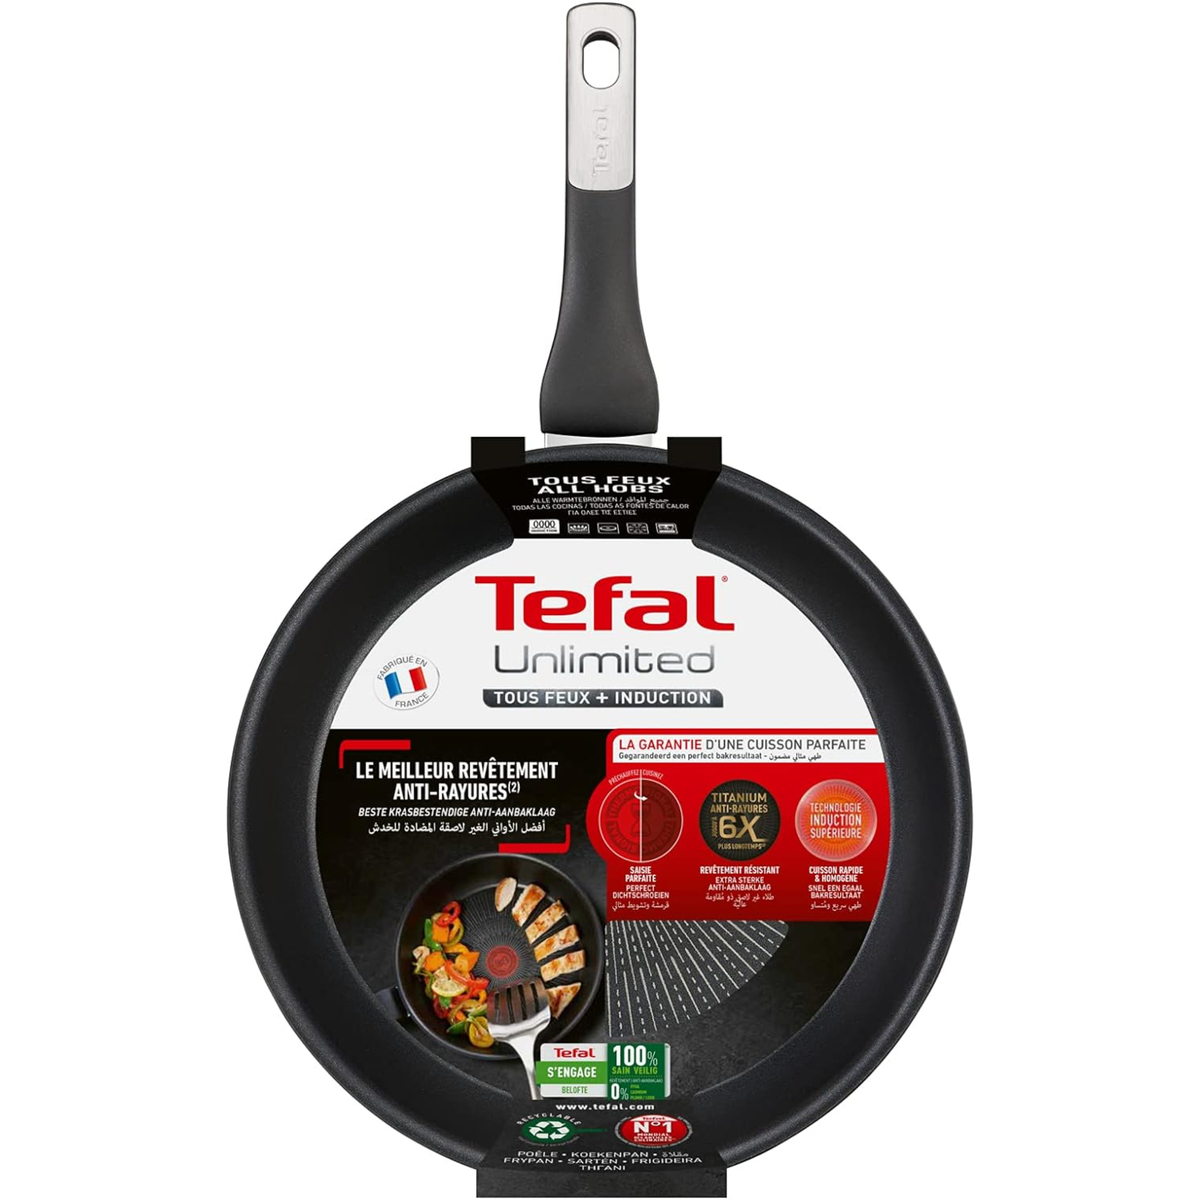 Tefal Unlimited Titanium Anti-Scratch Coating Fry Pan, 26 cm, G2550502